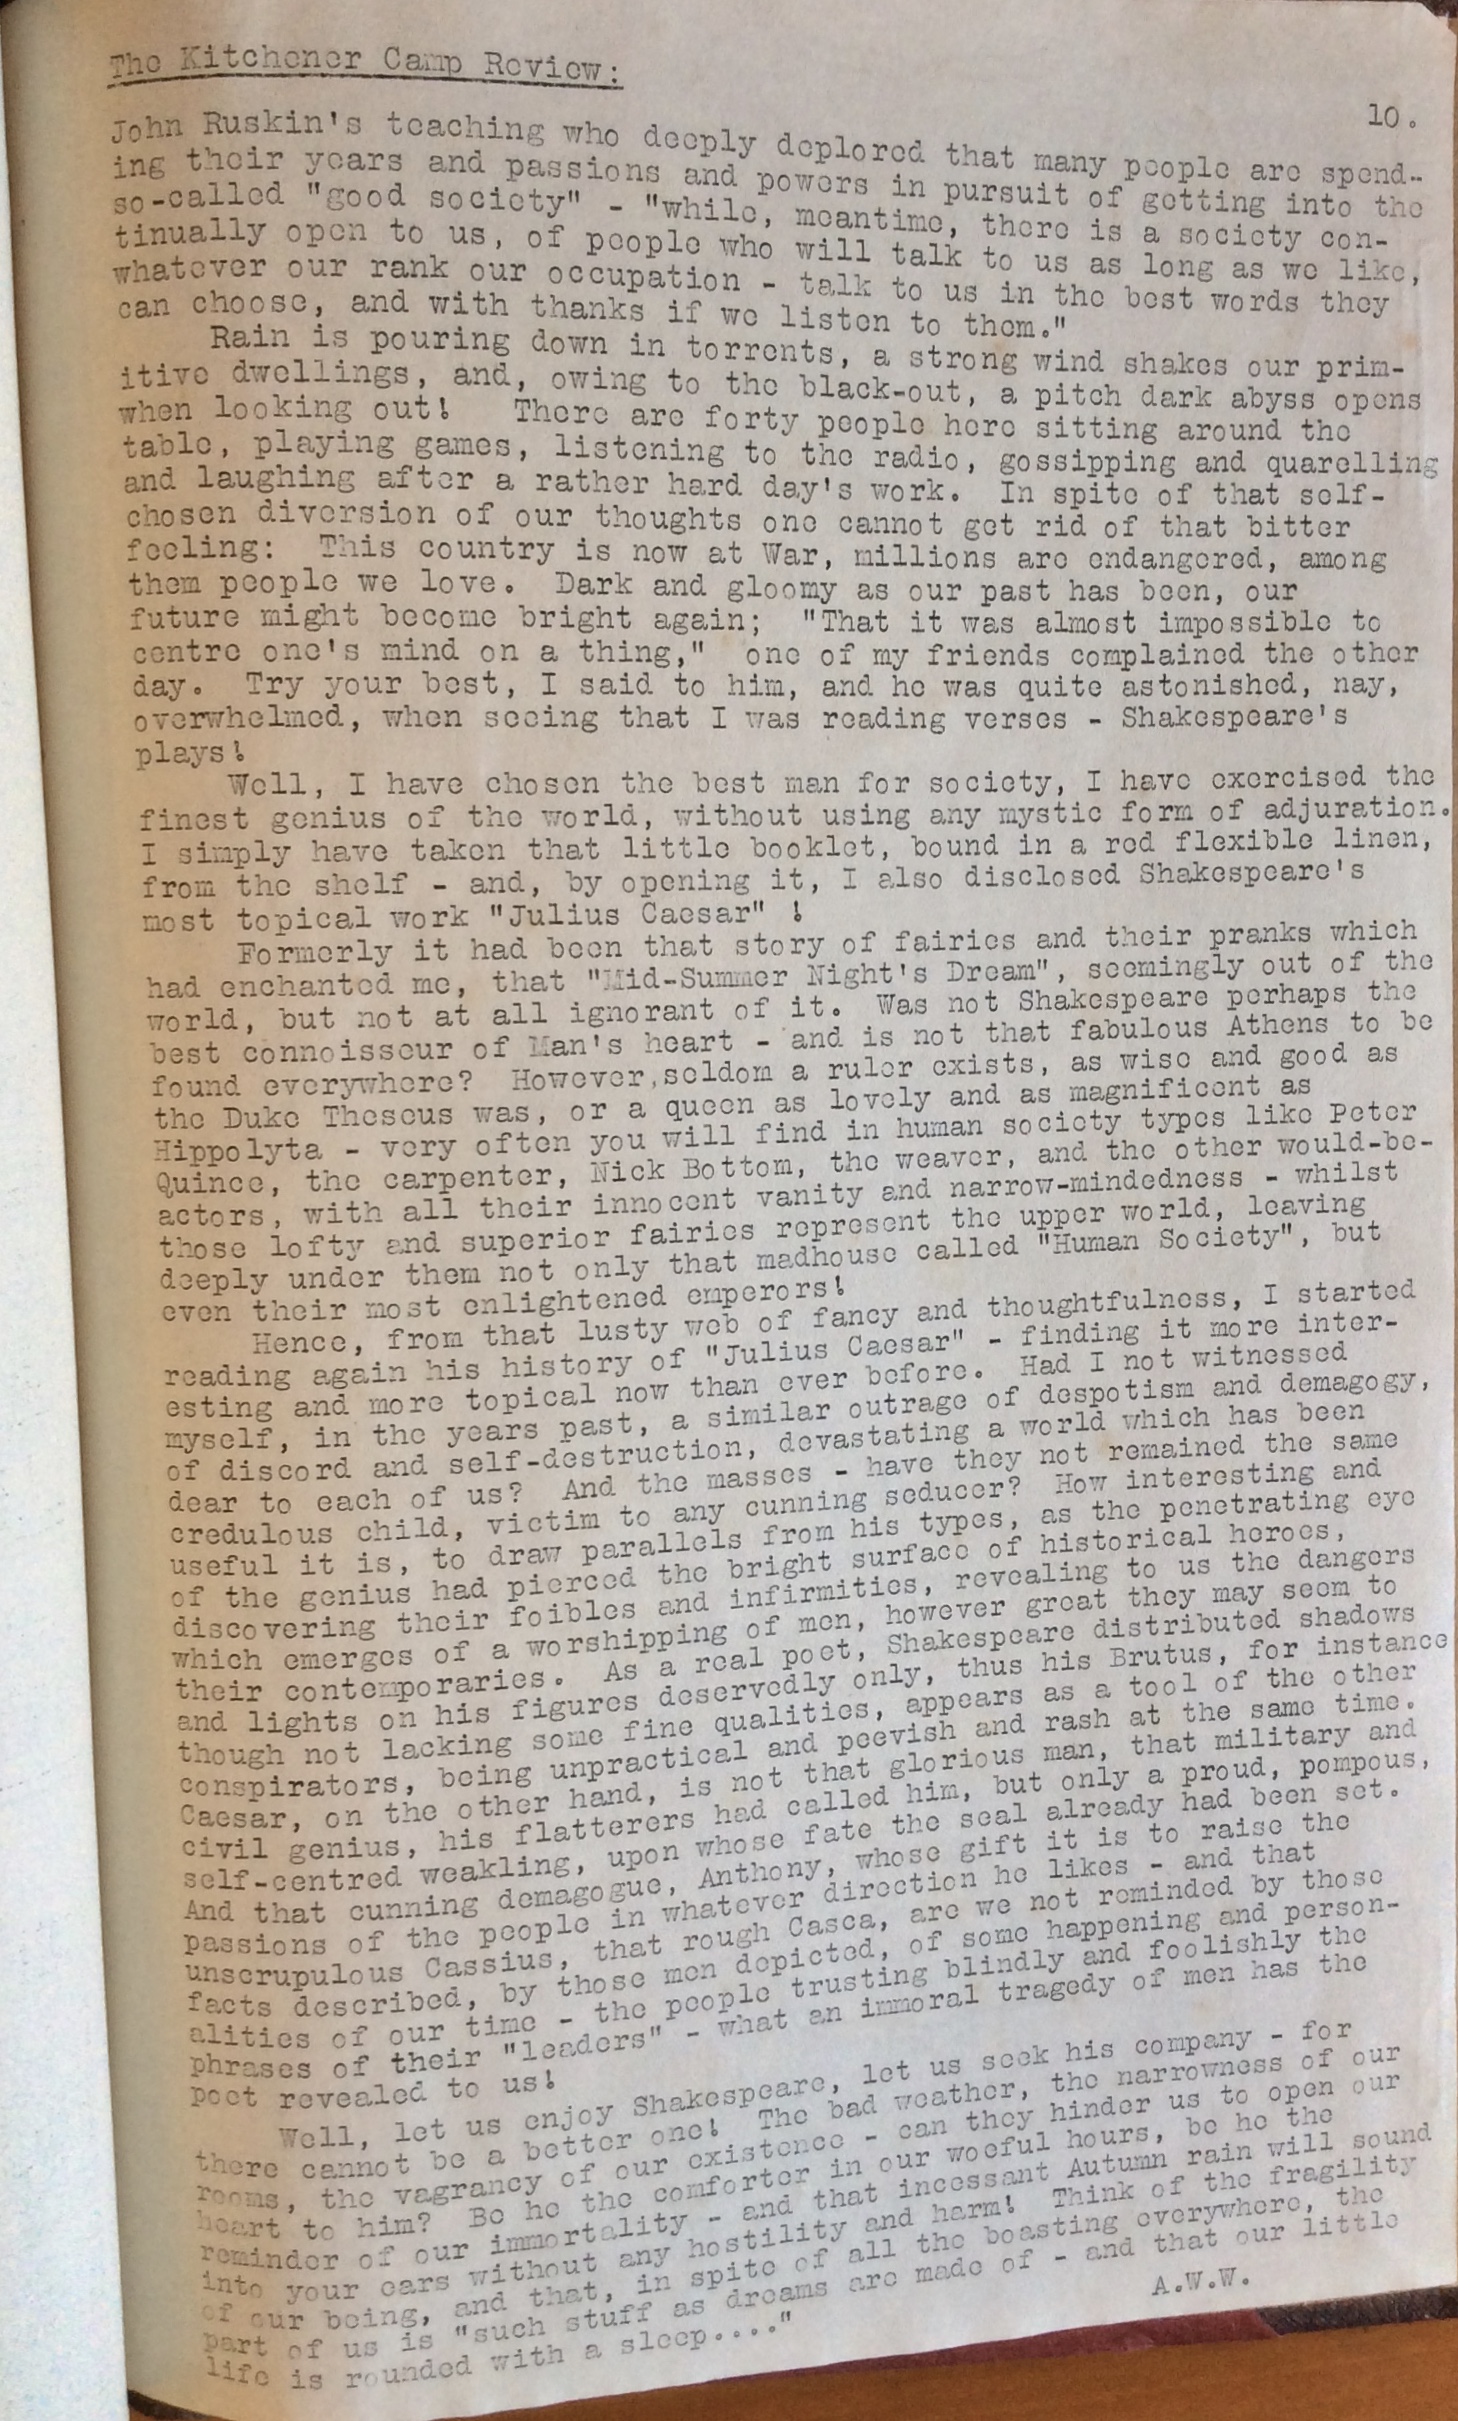 Kitchener Camp Review, November 1939, page 10